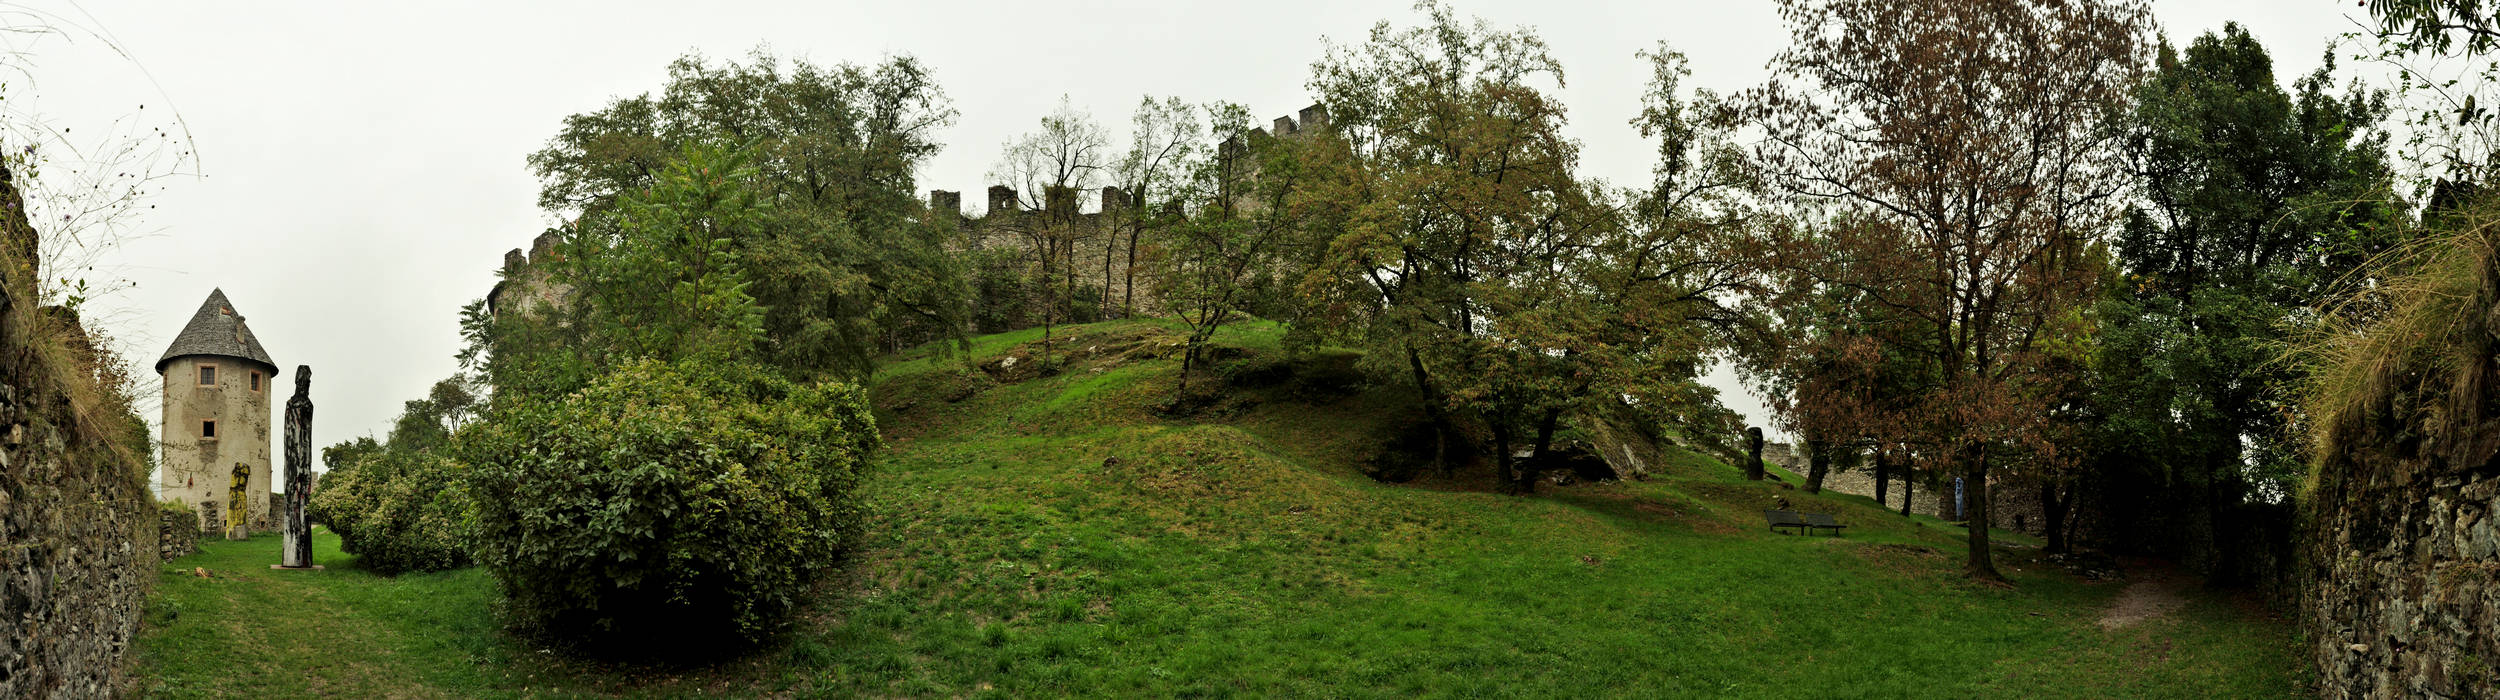 Castello di Pergine Valsugana